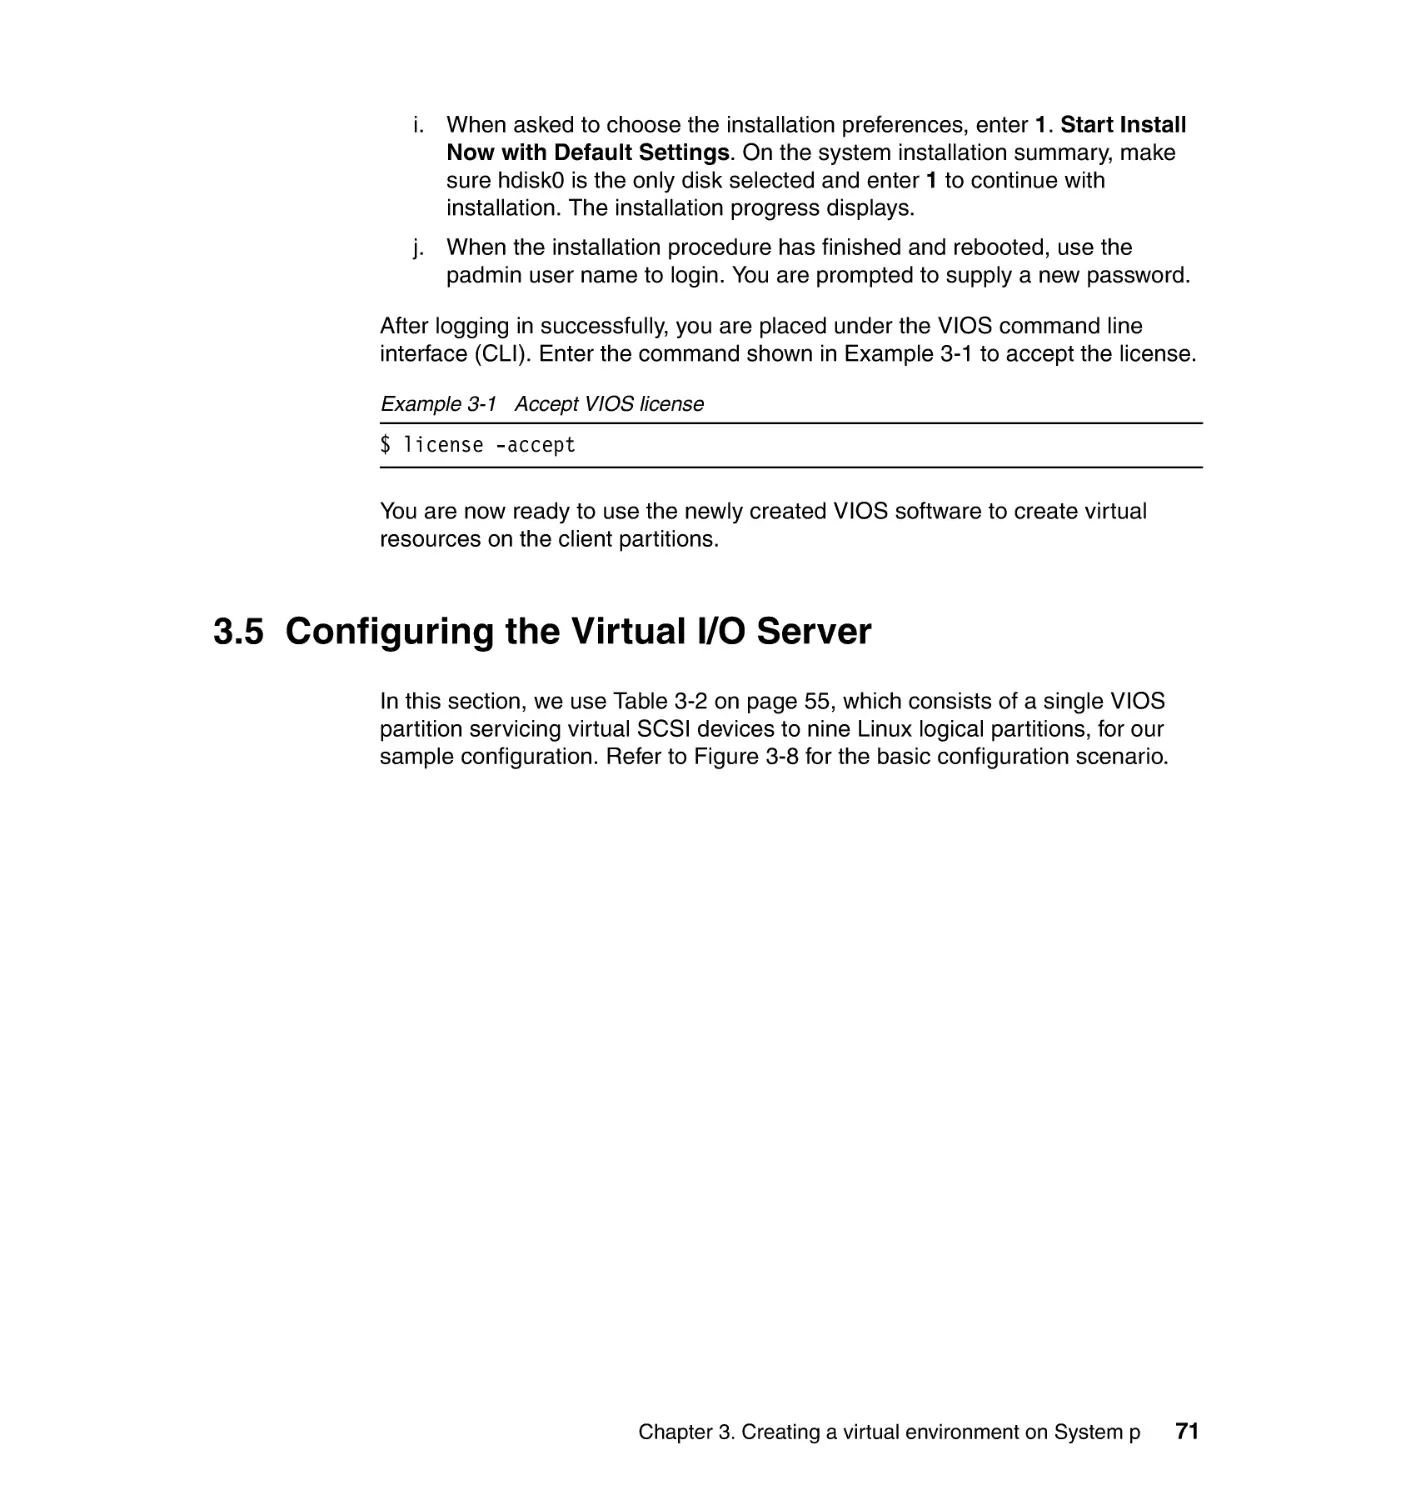 3.5 Configuring the Virtual I/O Server